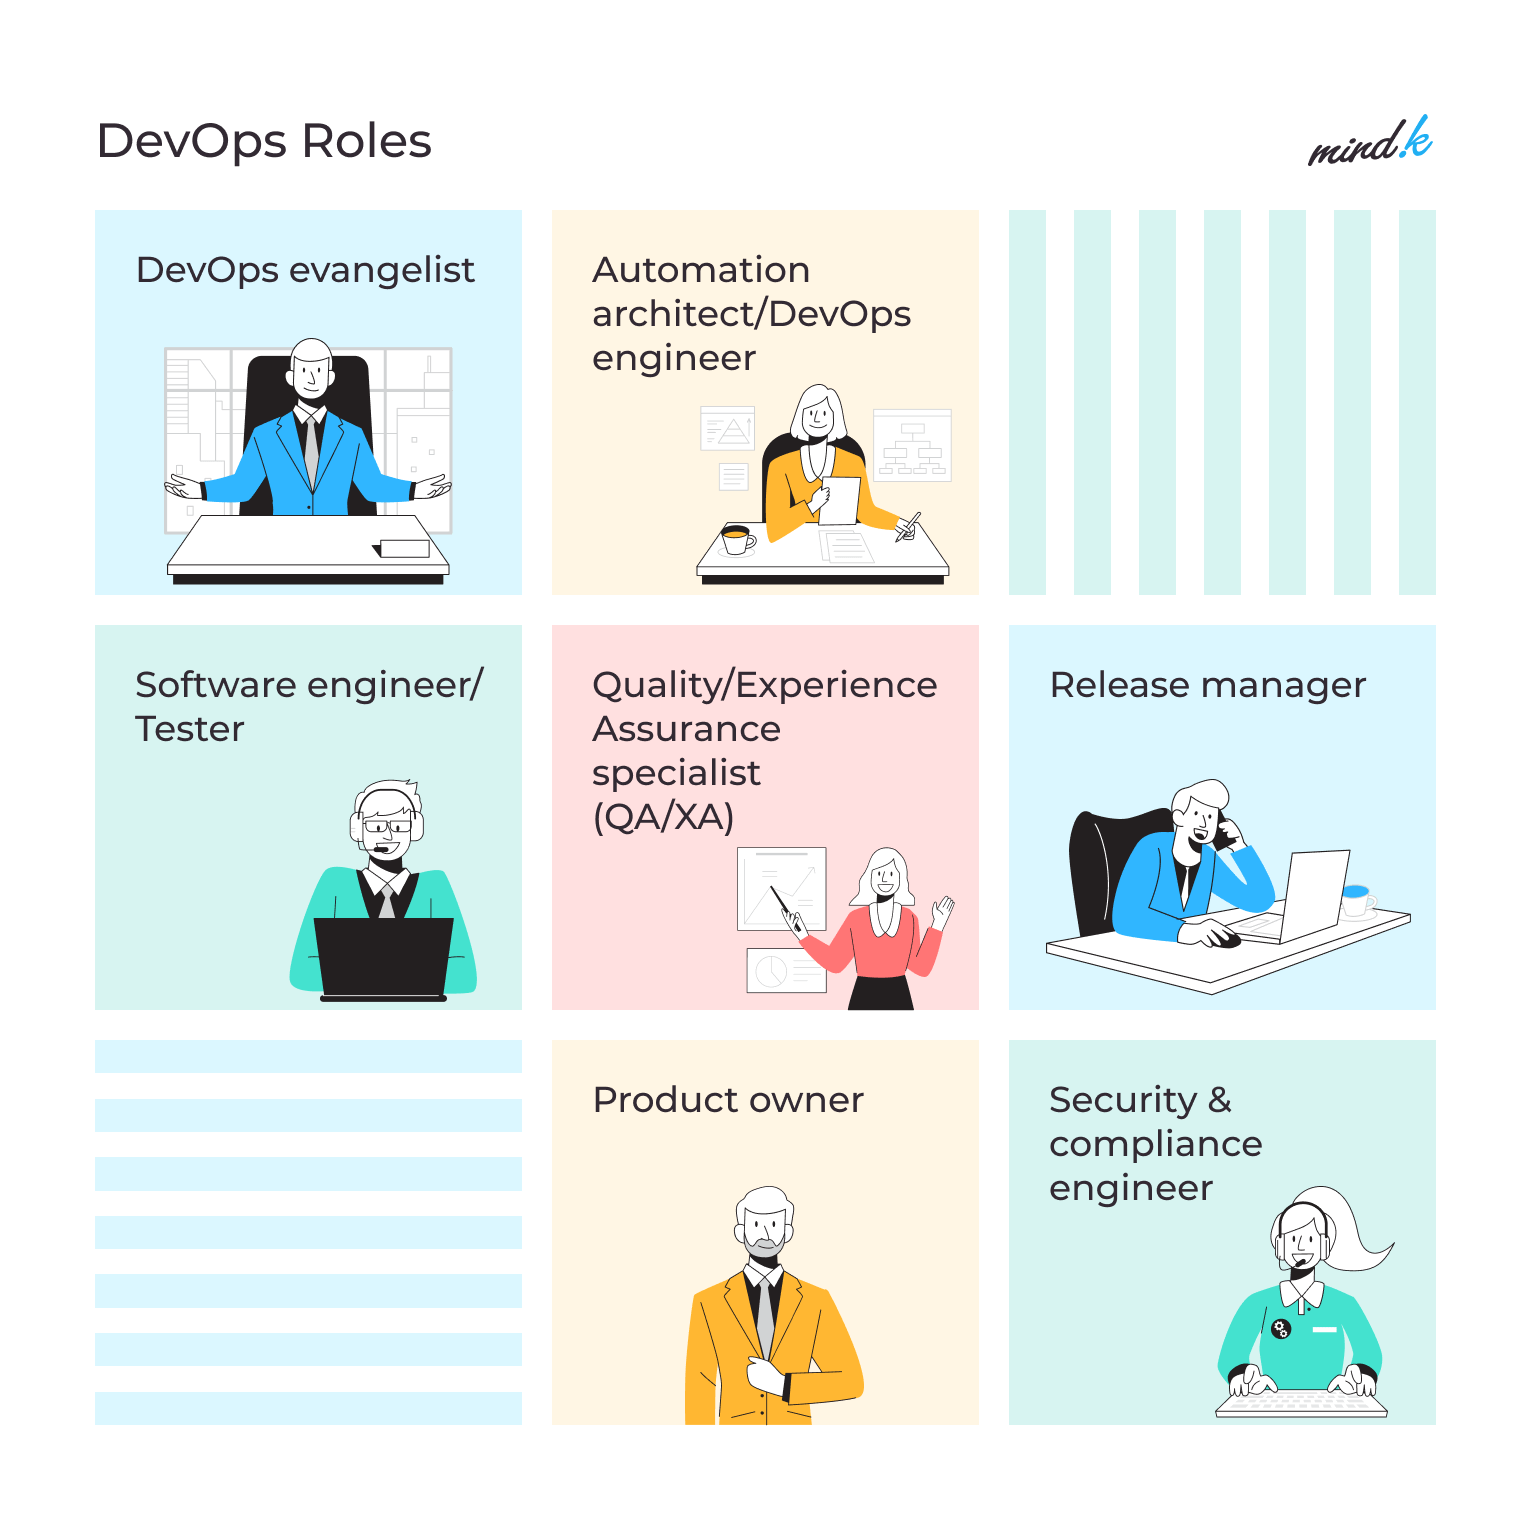 Typical DevOps roles